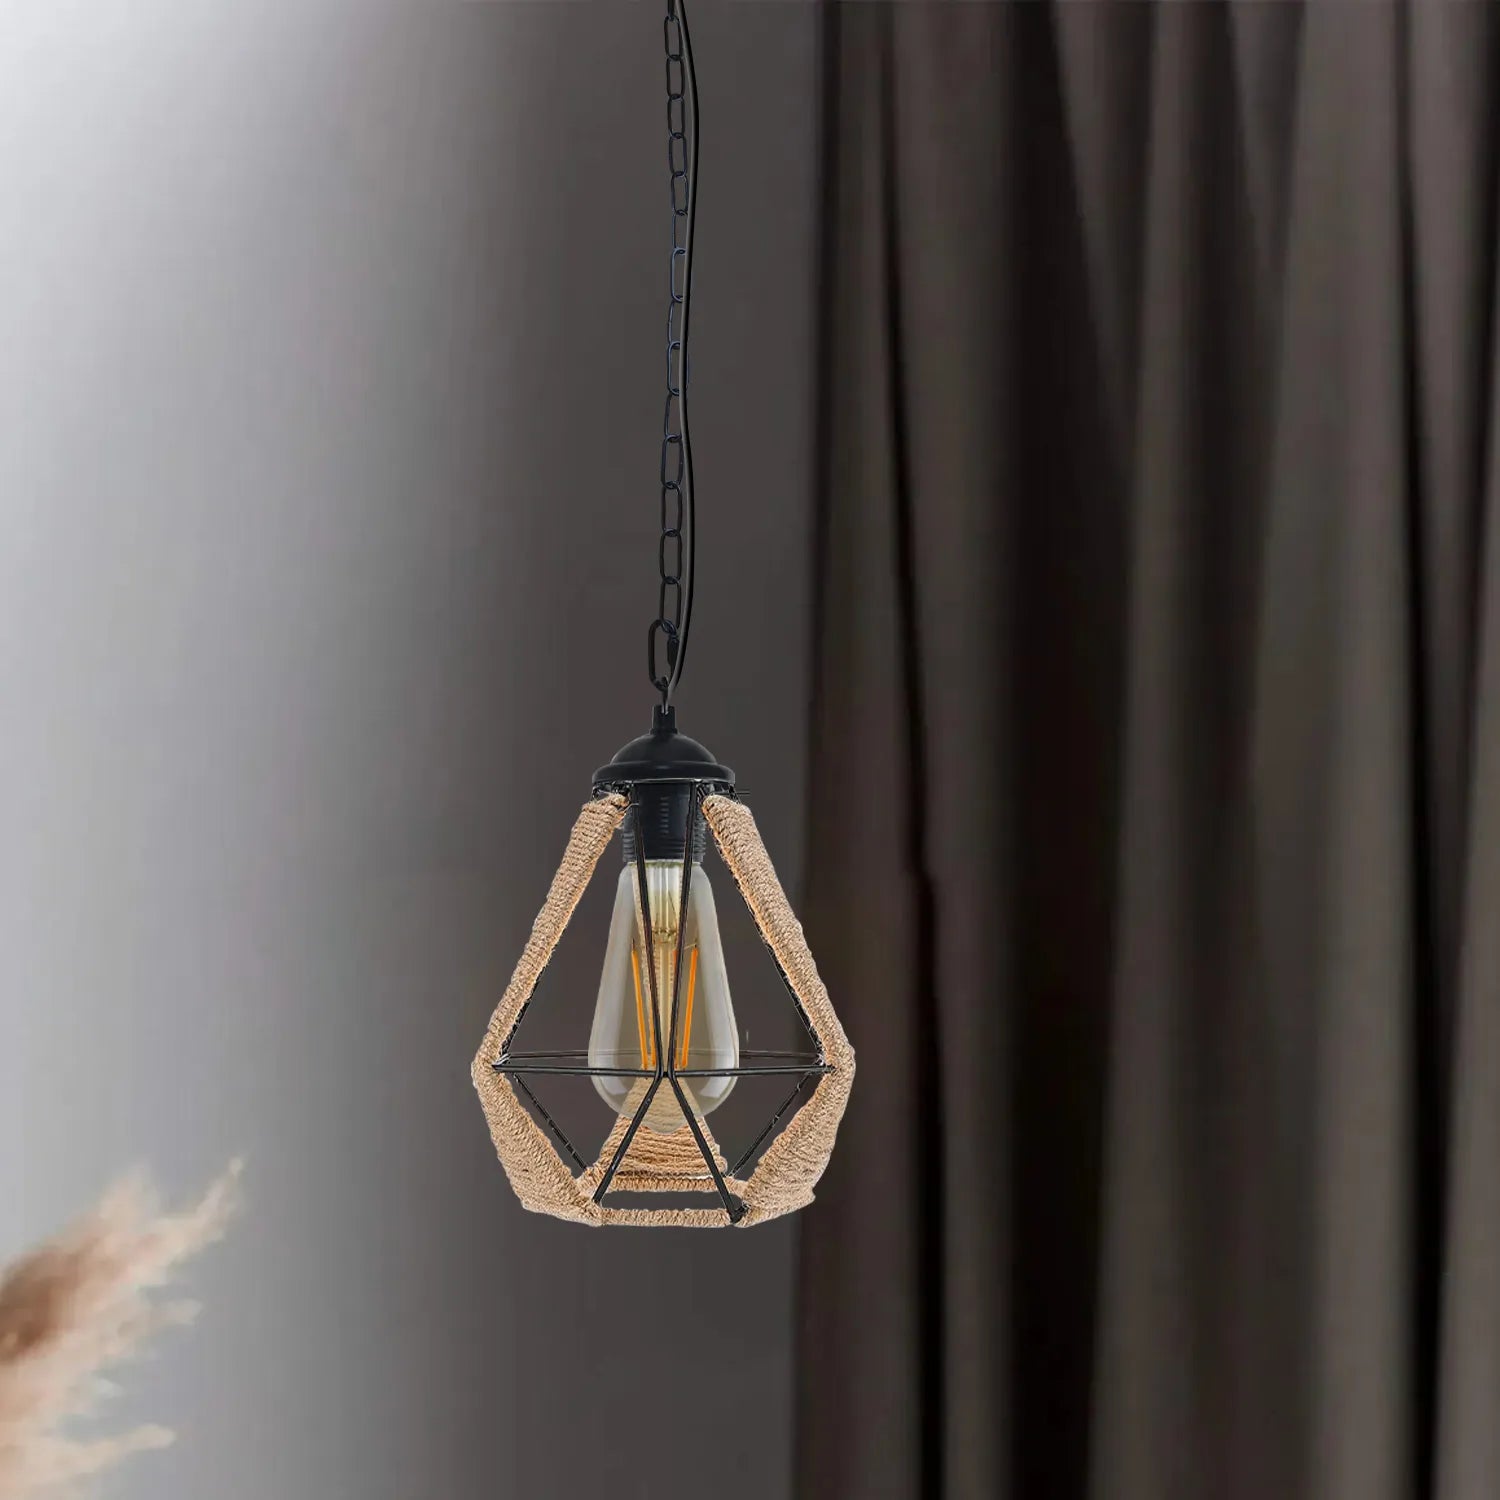 Brushed Copper Pendant Light Fixture  60cm Hanging Lamp Fixture Chain ~4442